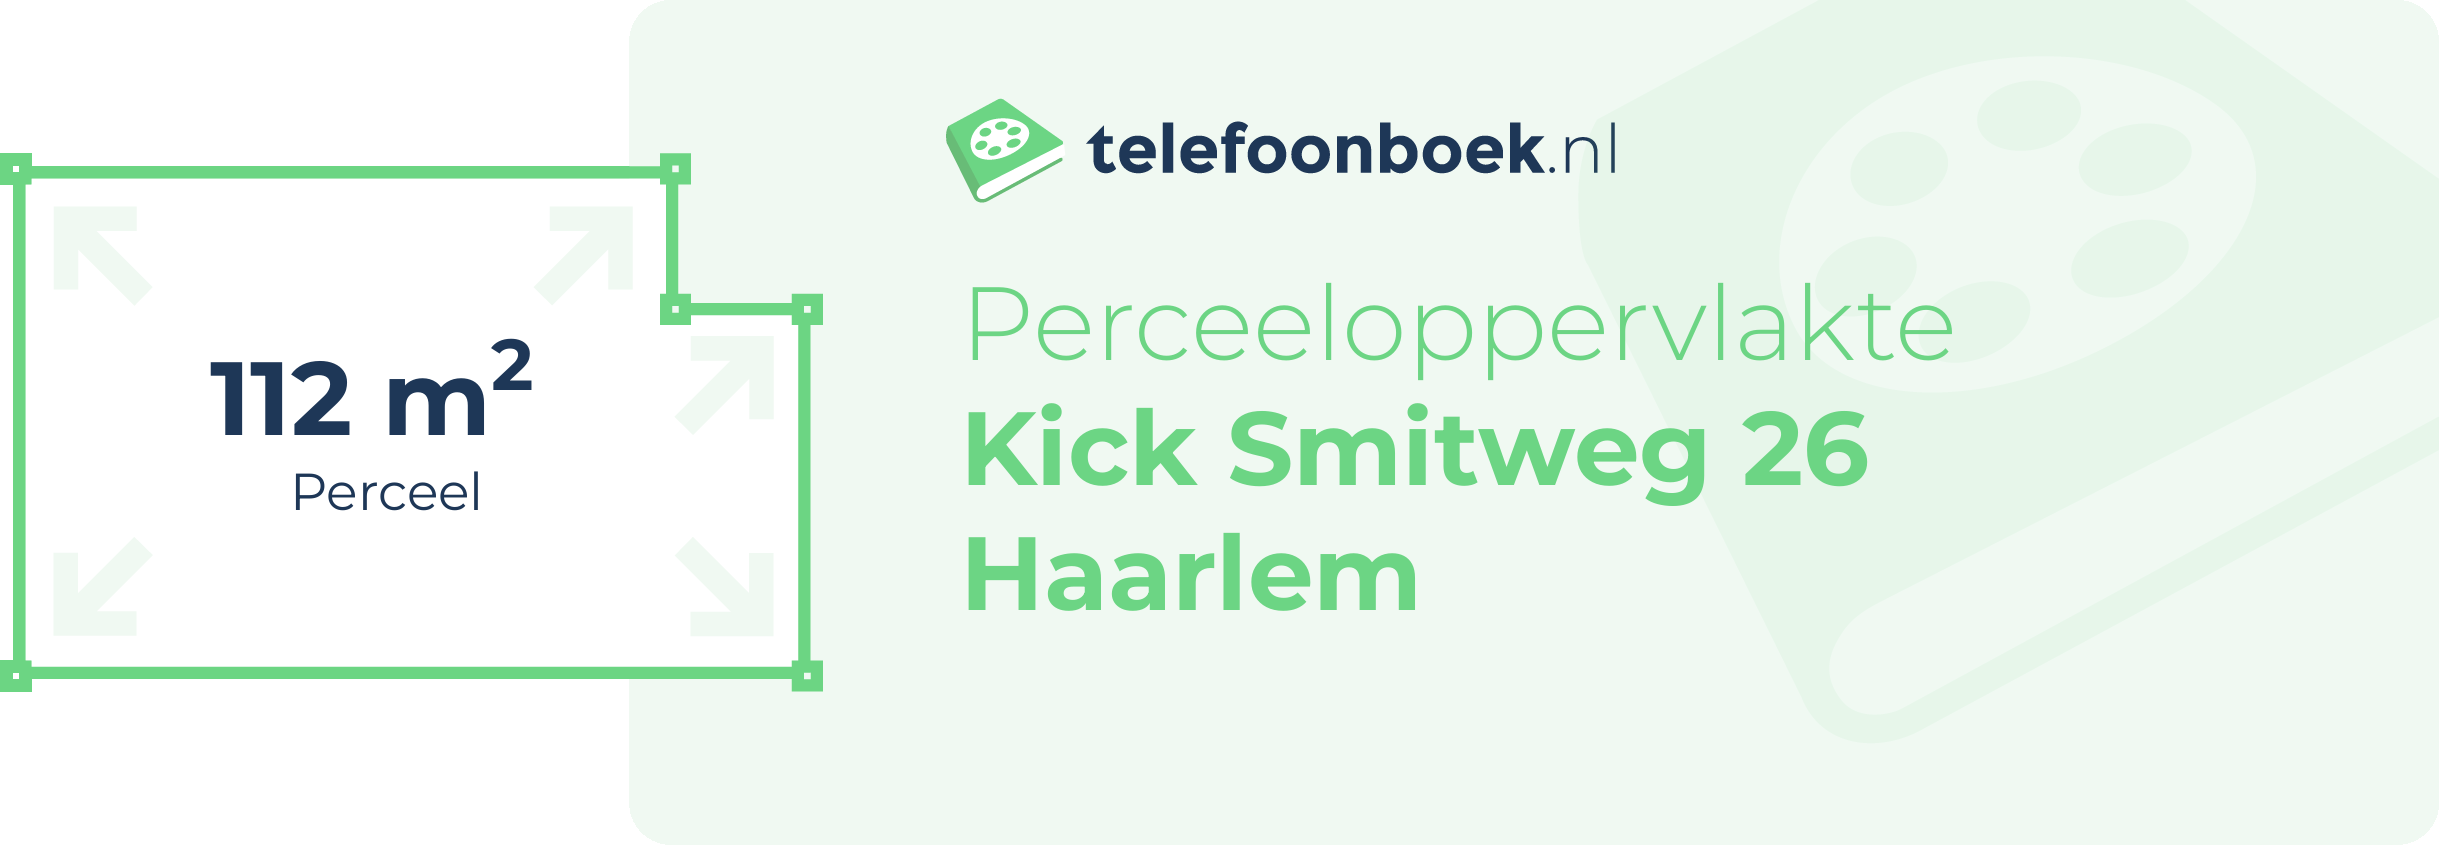 Perceeloppervlakte Kick Smitweg 26 Haarlem